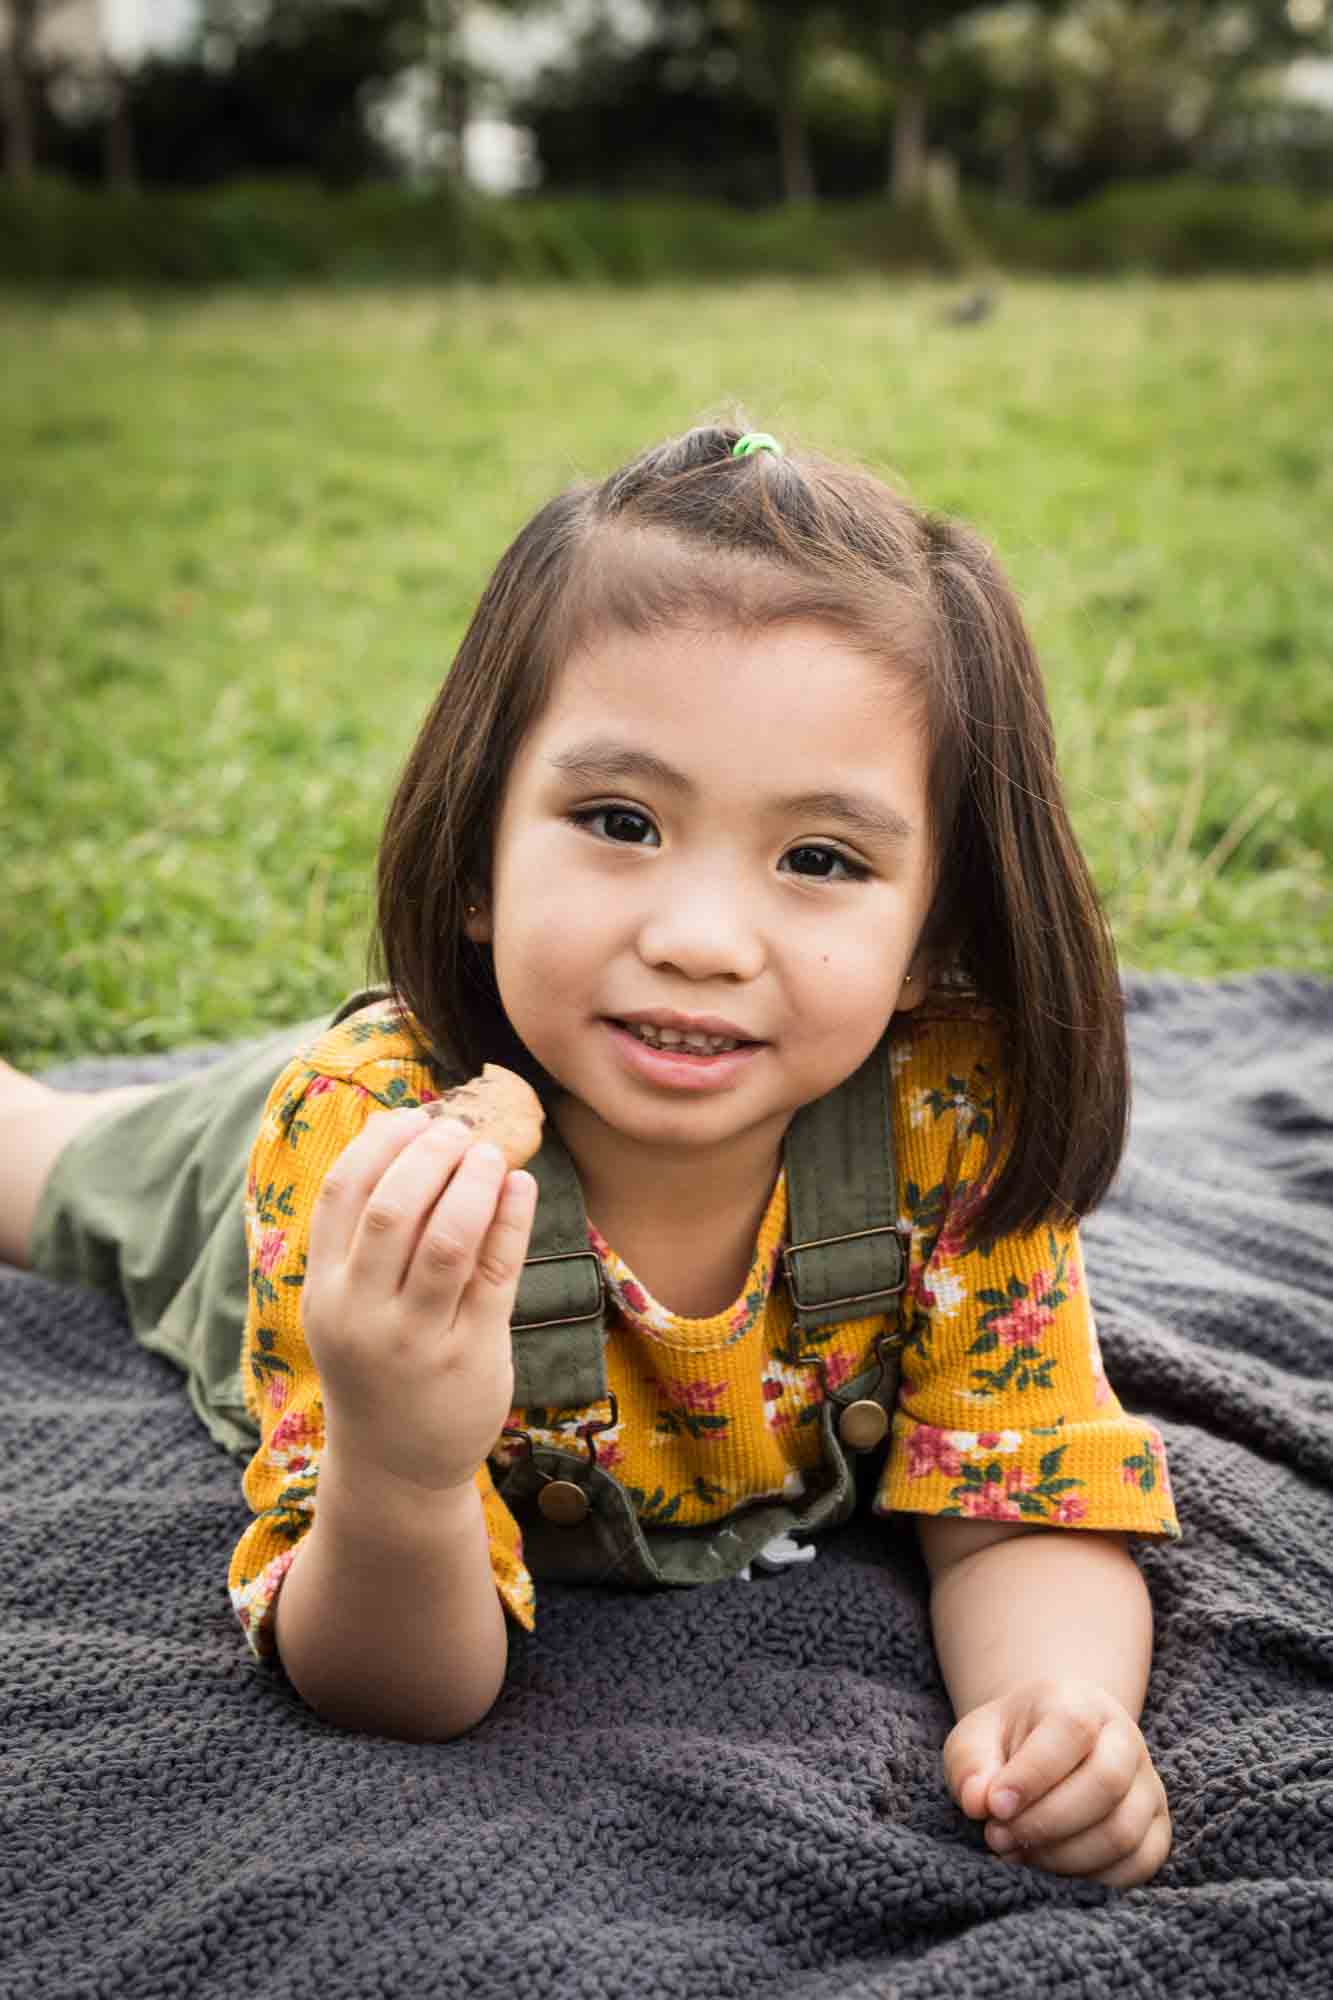 Little girl wearing yellow shirt eating cookie on grey blanket